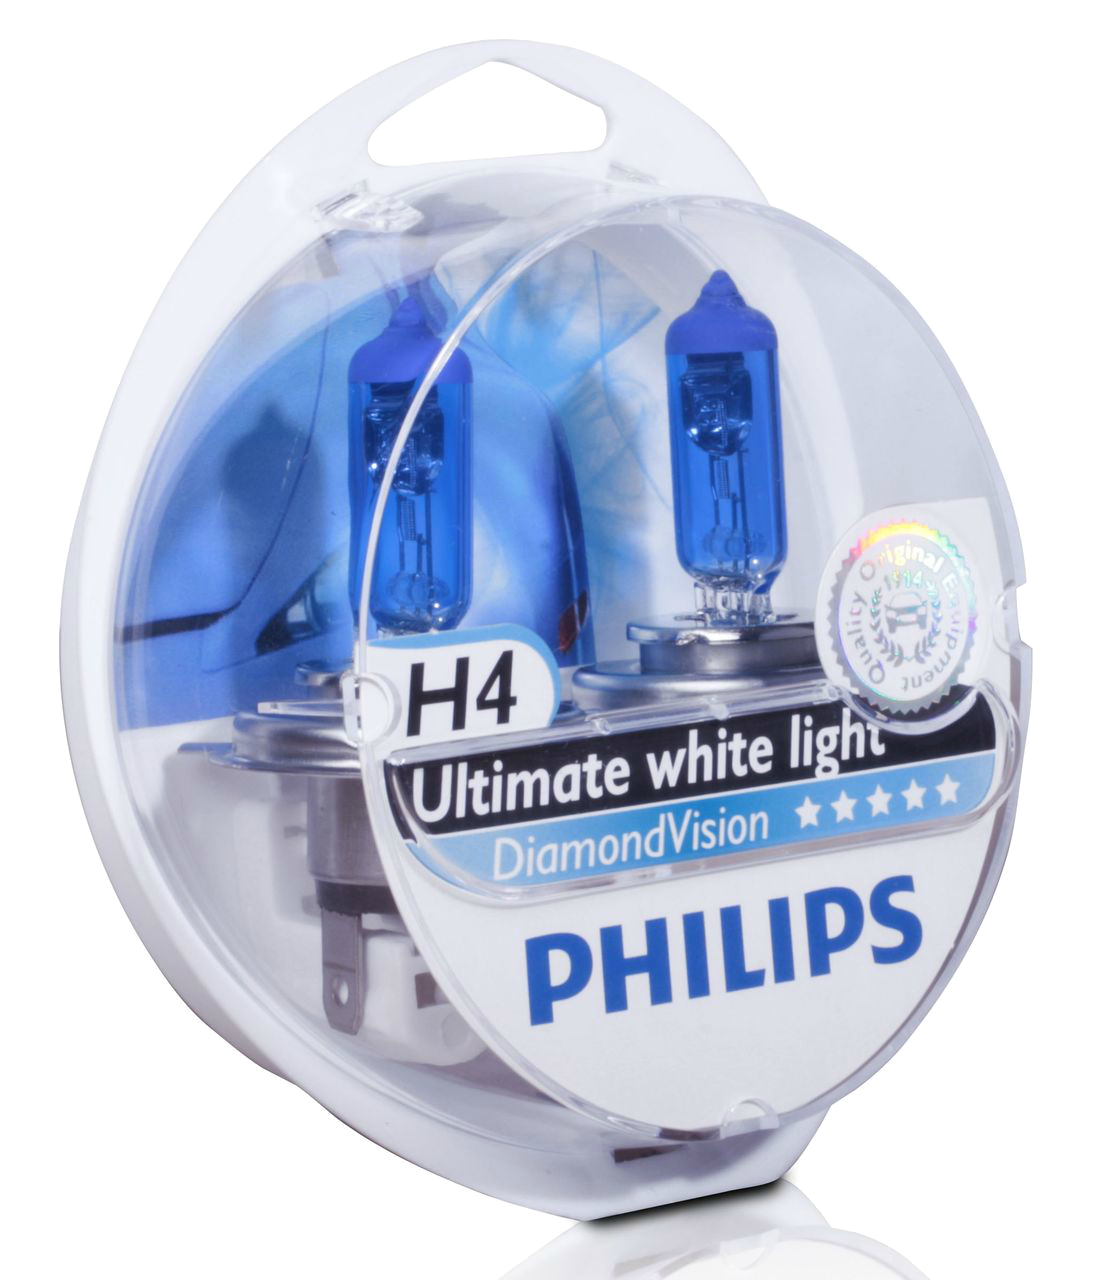 Philips h4 купить. Лампы Philips h4 55\60w-12v Diamond Vision 5000k. H4 Philips 12342dvs2. Philips 12v h4 60/55w Diamond Vision. Лампа h4 12v 60/55w Philips.